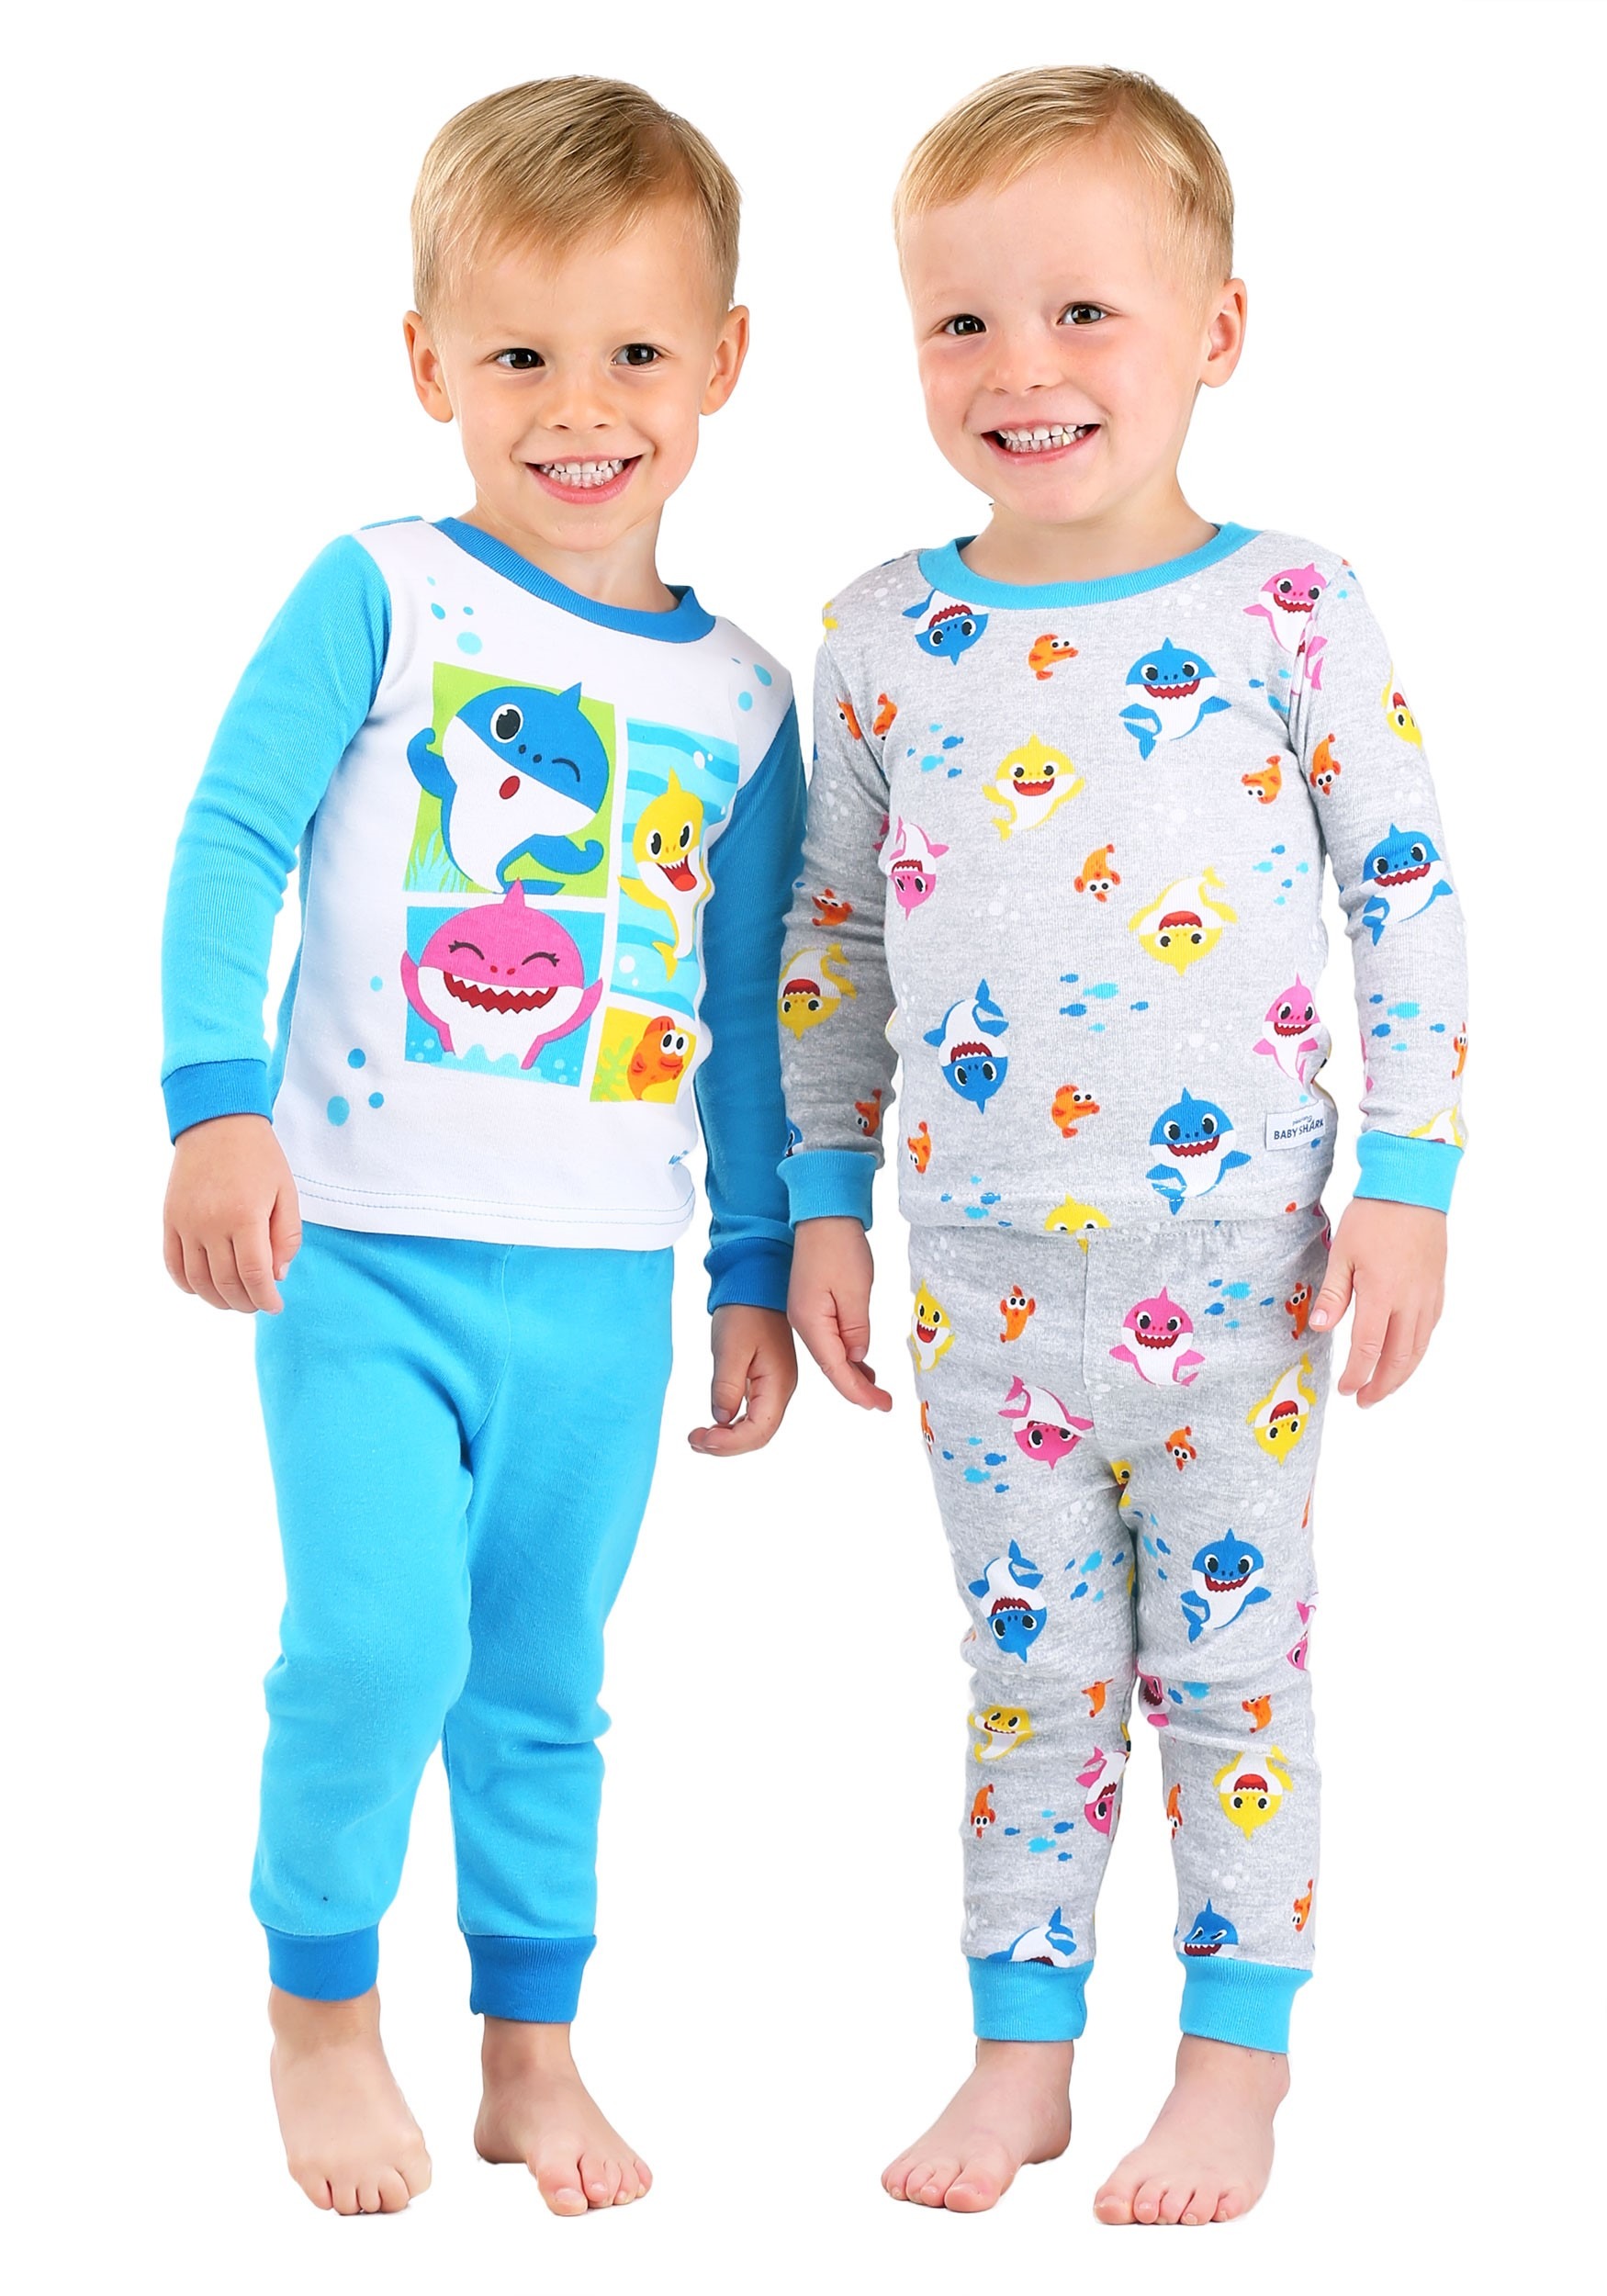 Baby Shark 4 Piece Sleepwear Set for Toddlers